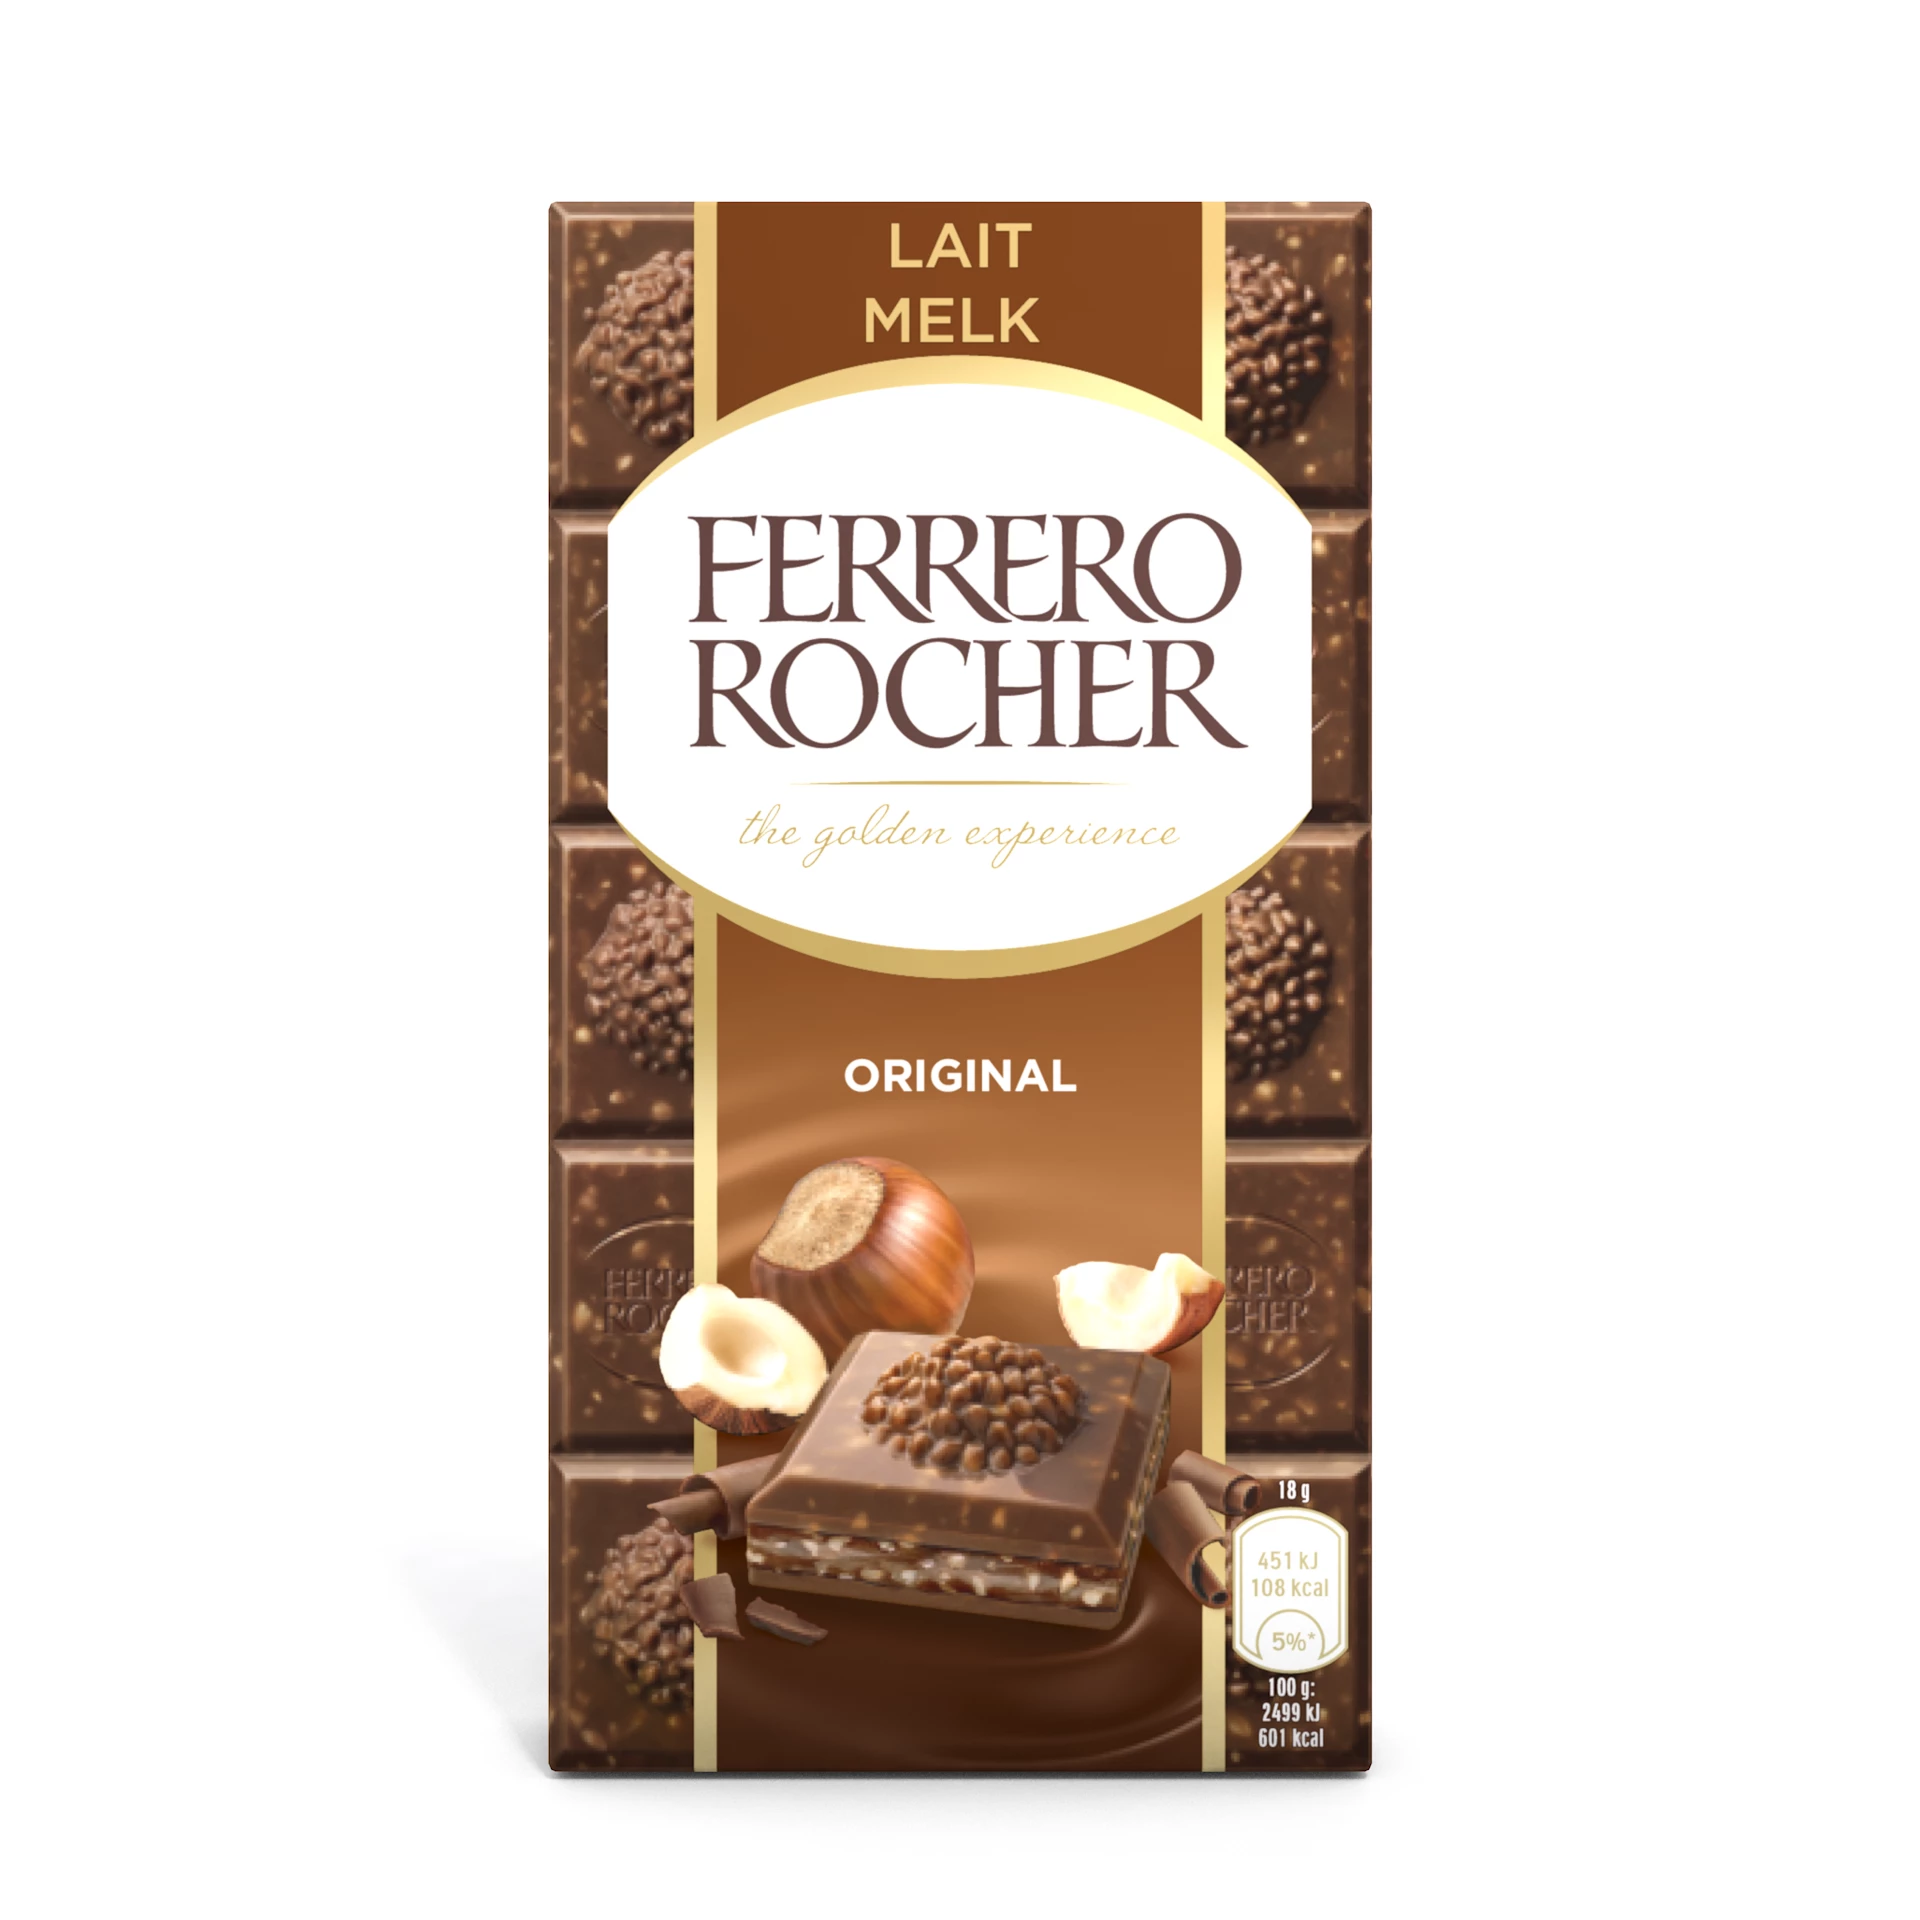 Sữa hạt phỉ Ferrero Rocher, 90g - FERRERO